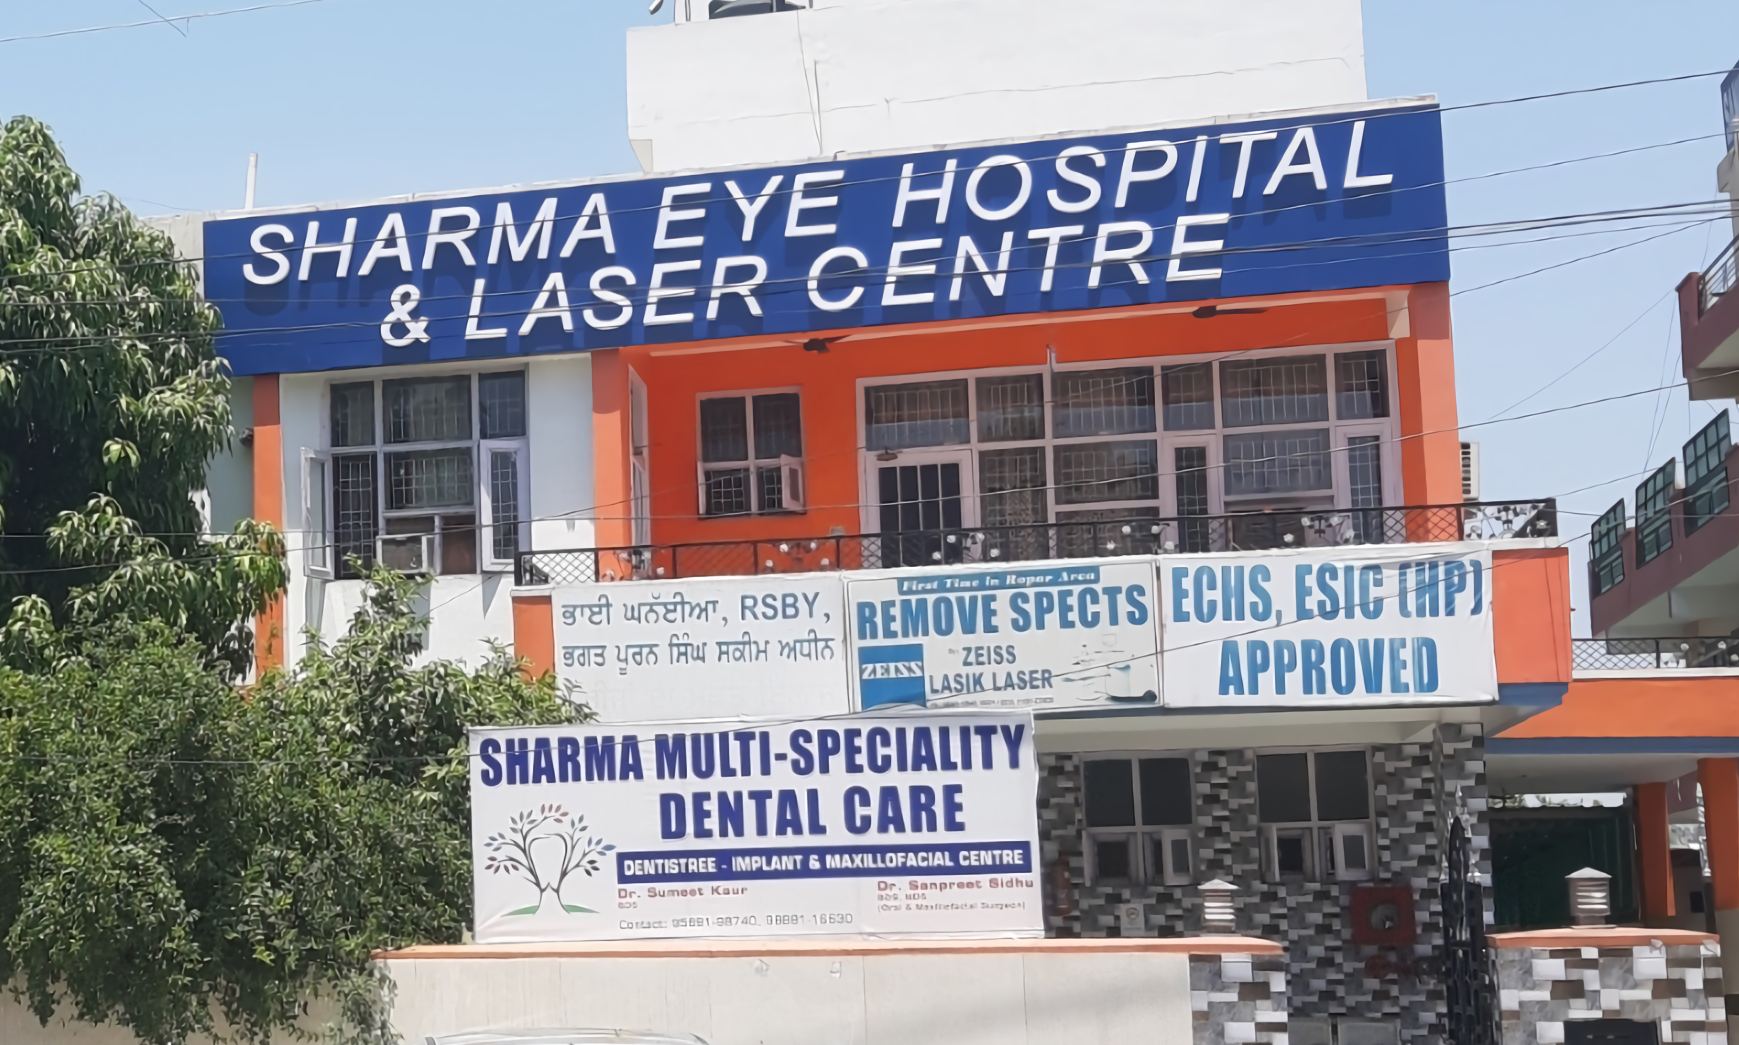 Sharma Eye Hospital And Laser Centre